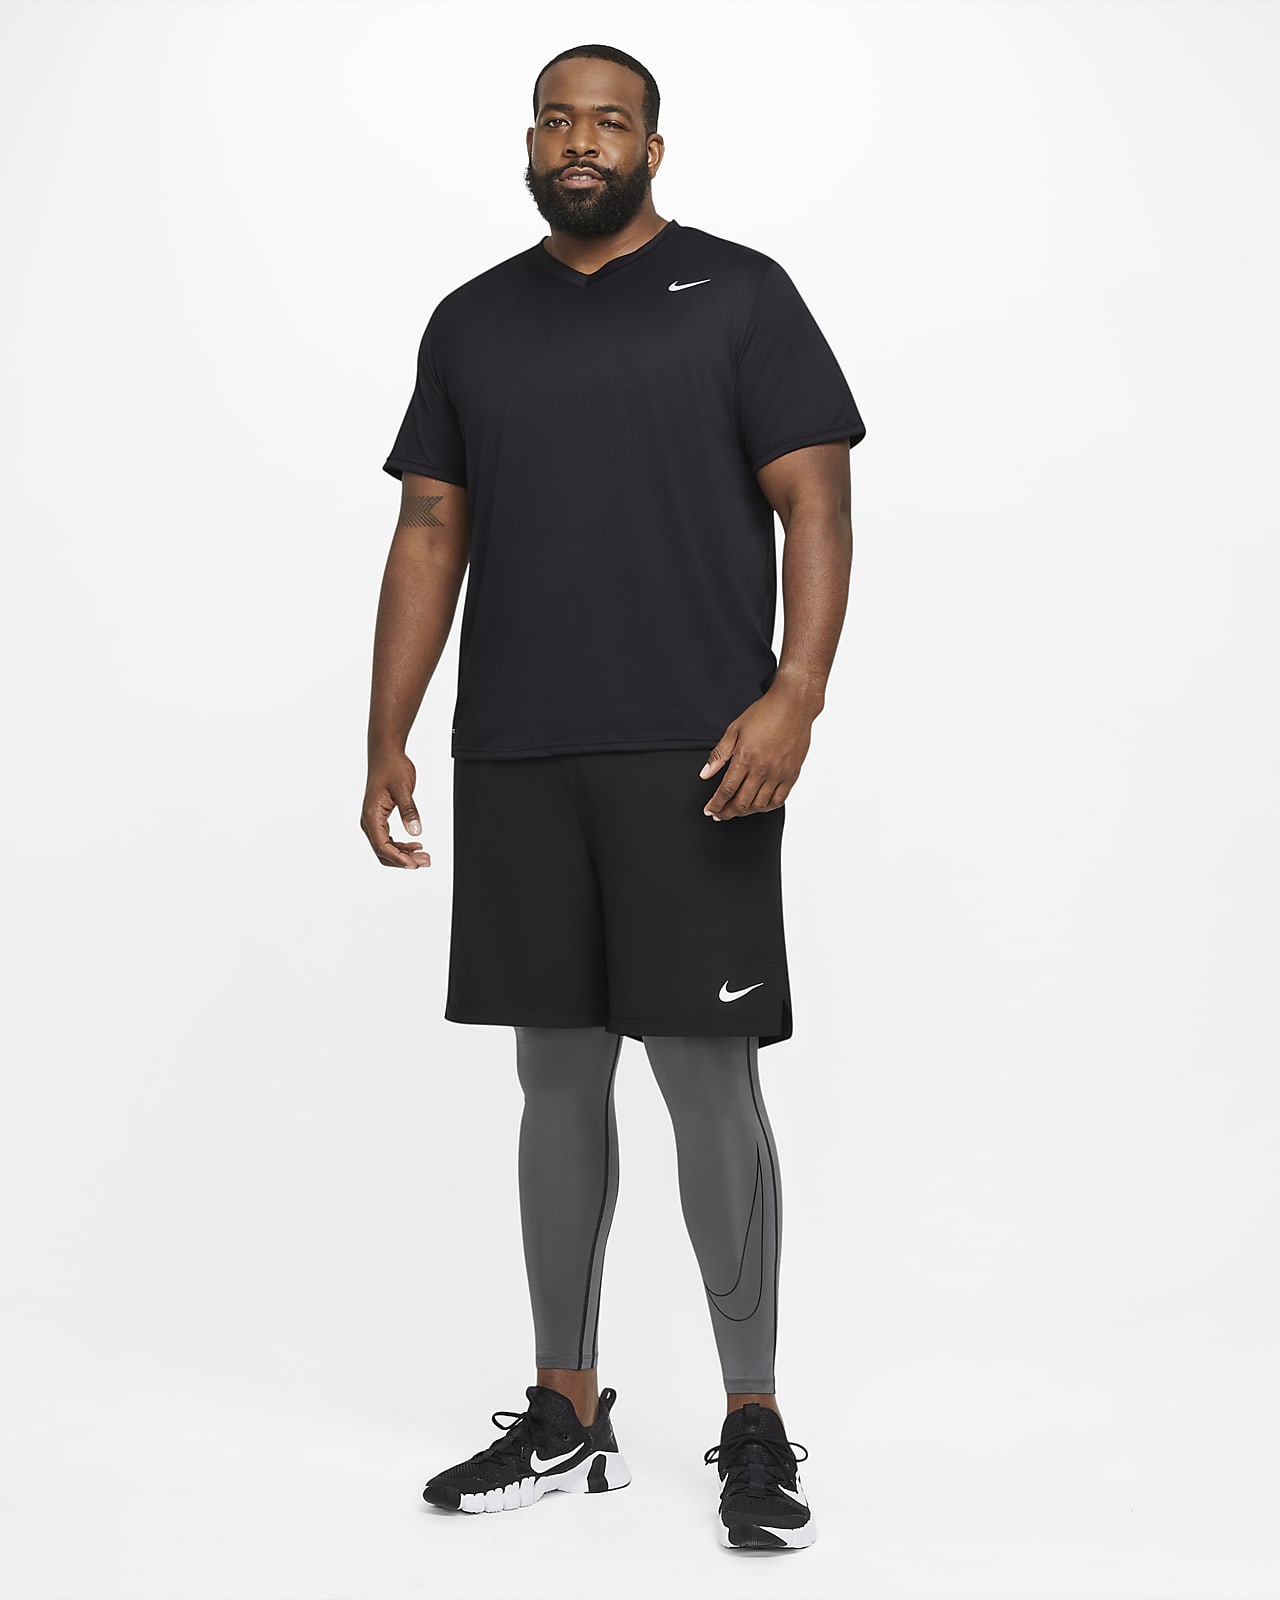 NIKE FITNESS Nike PRO - Débardeur Homme black/white - Private